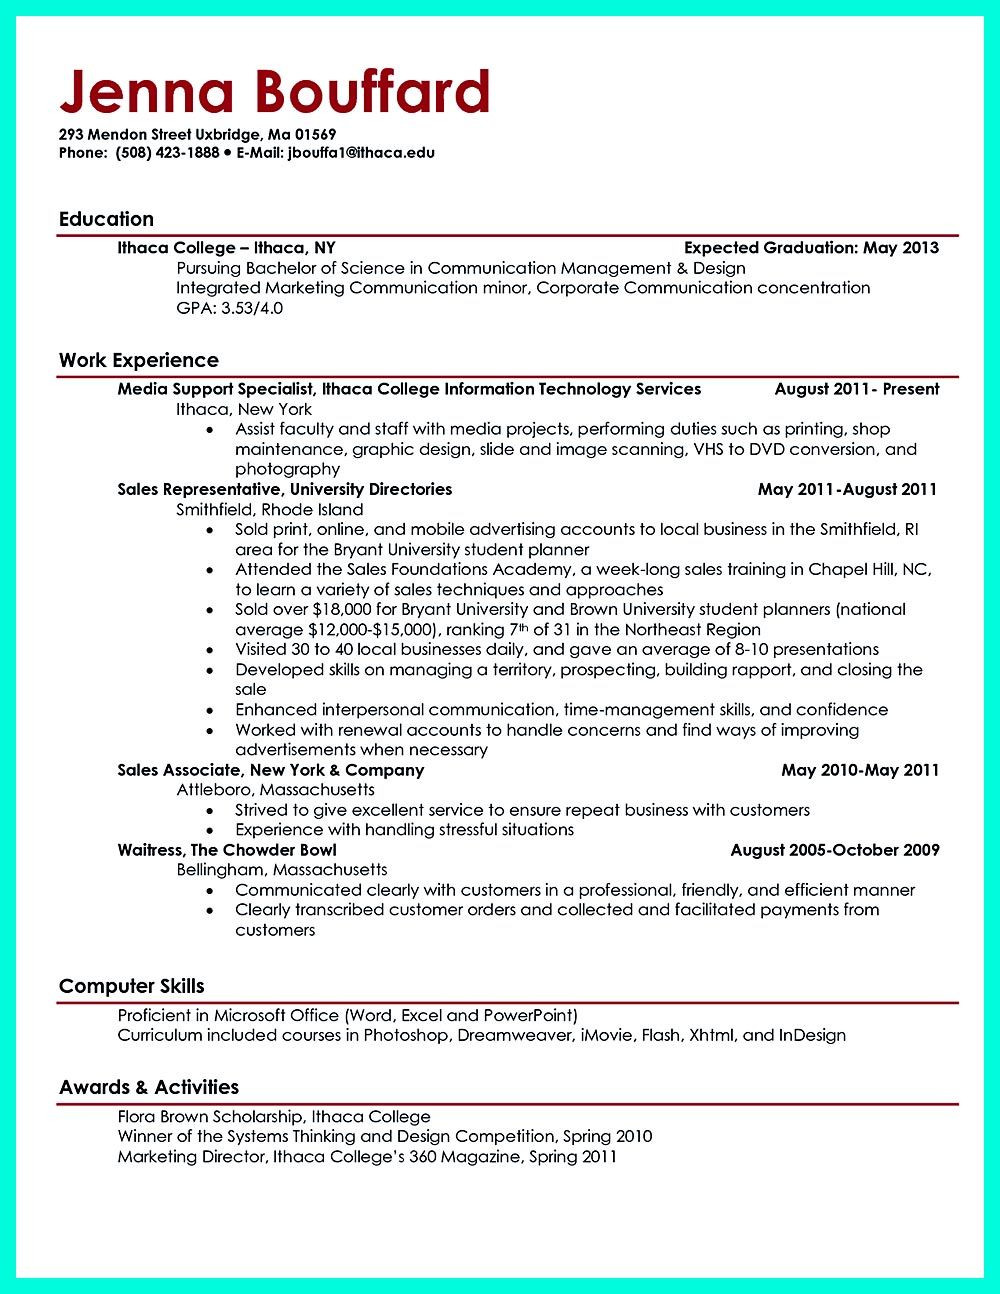 Sample Resume for Graduating College Student Best Current College Student Resume with No Experience Job …